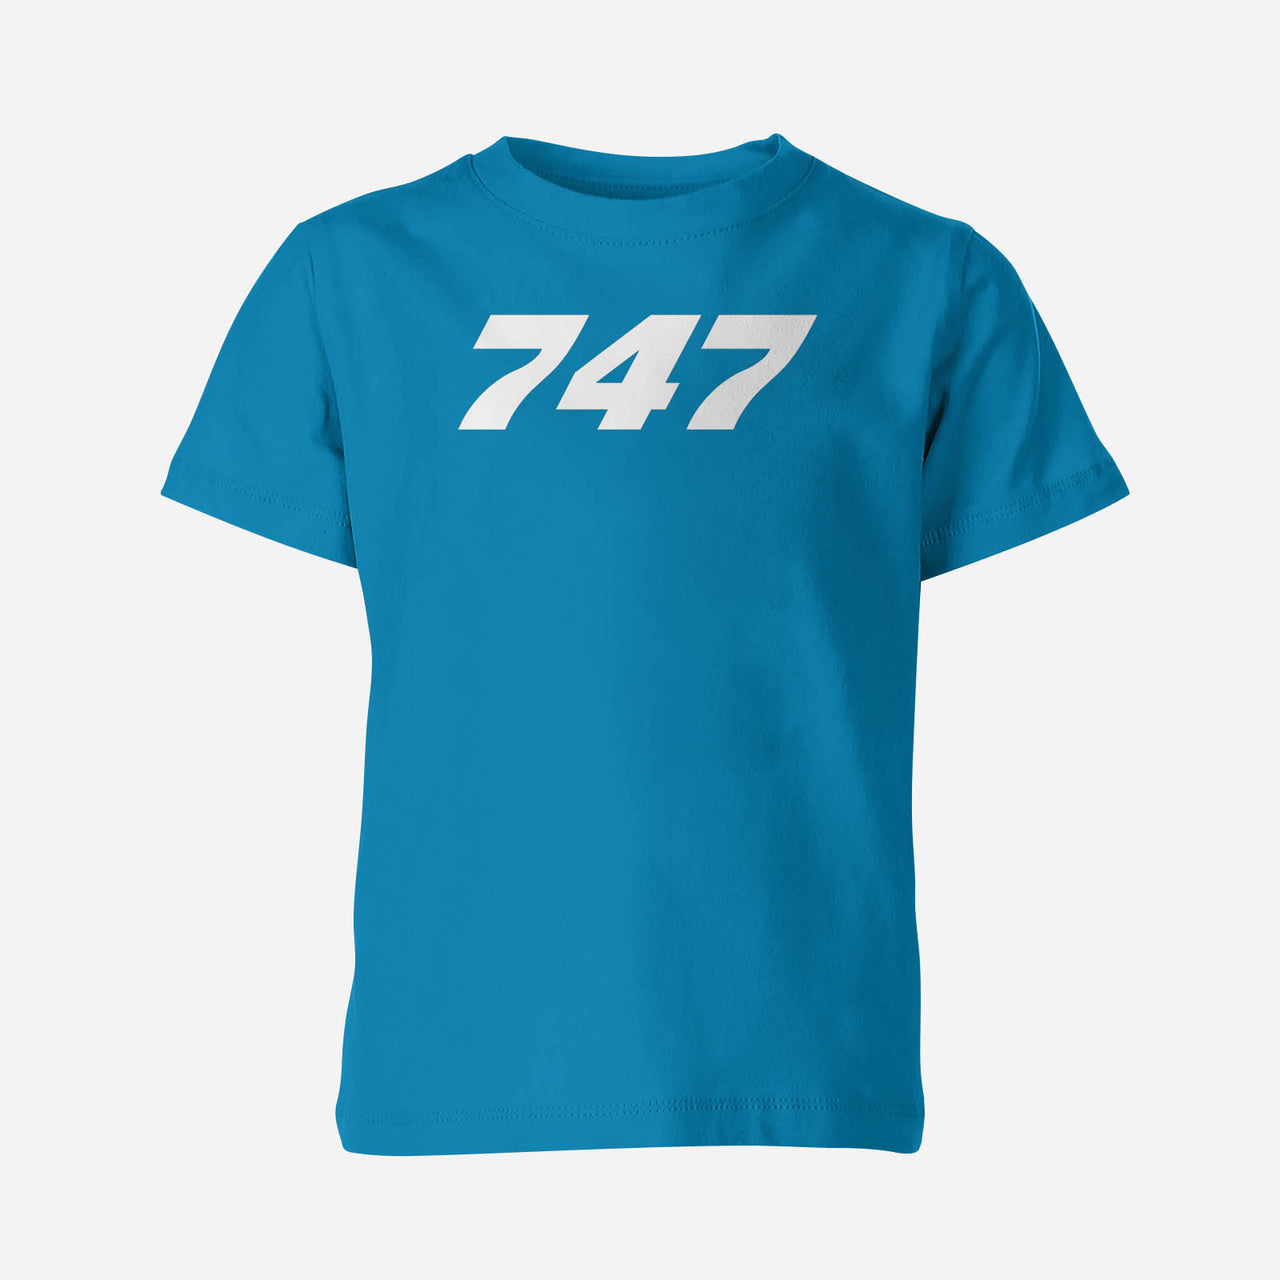 747 Flat Text Designed Children T-Shirts